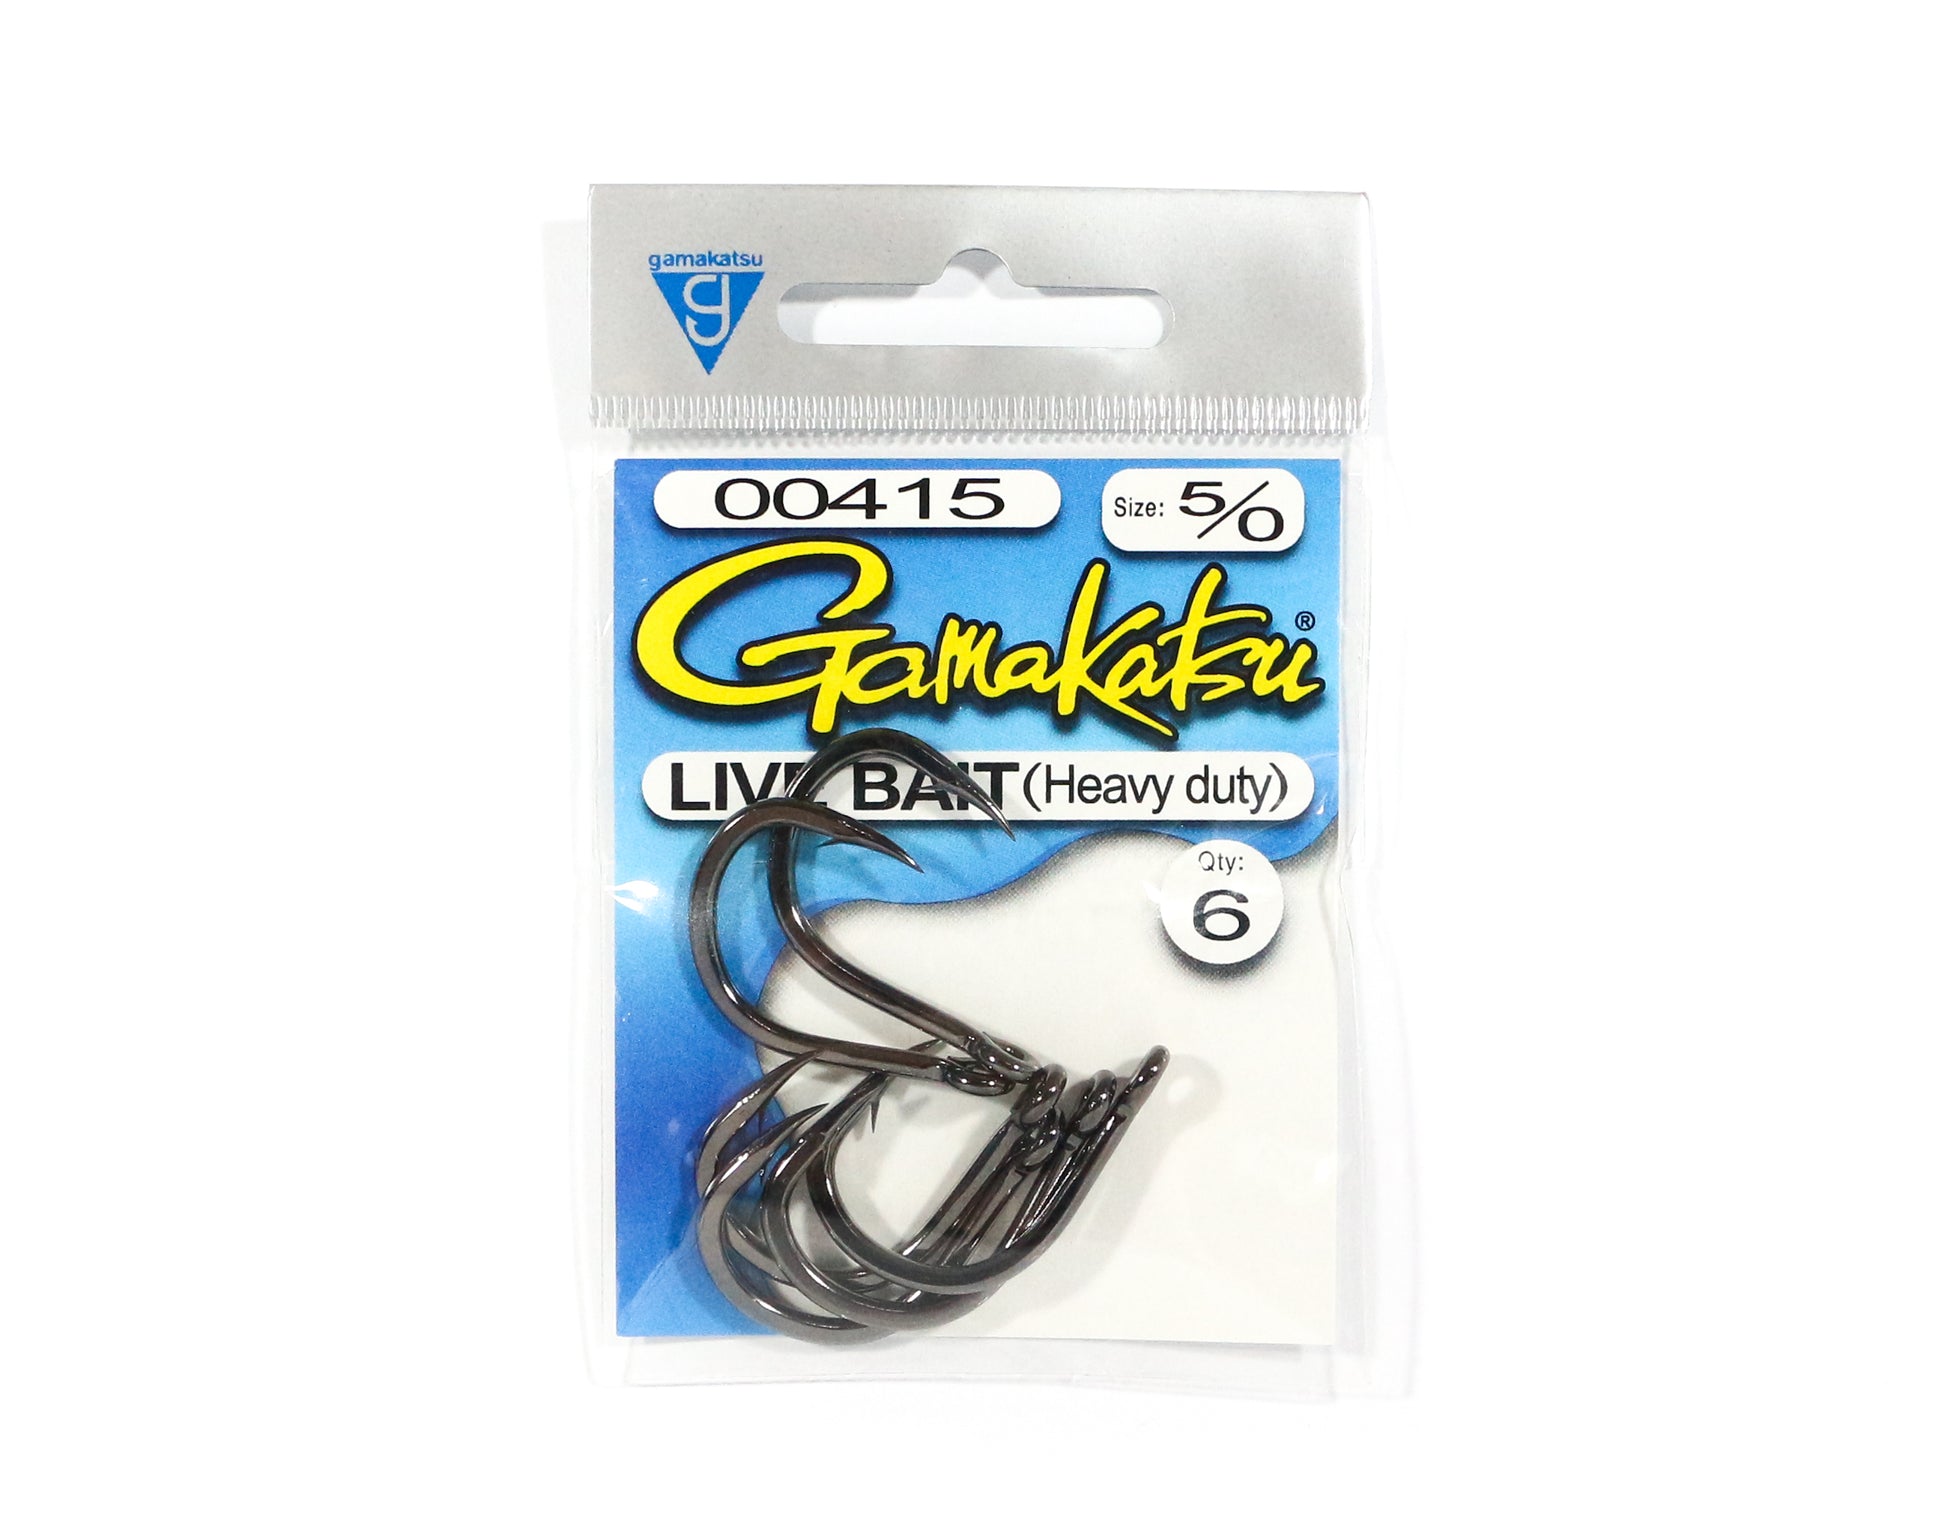 gamakatsu live bait hook value pack - size 1/0